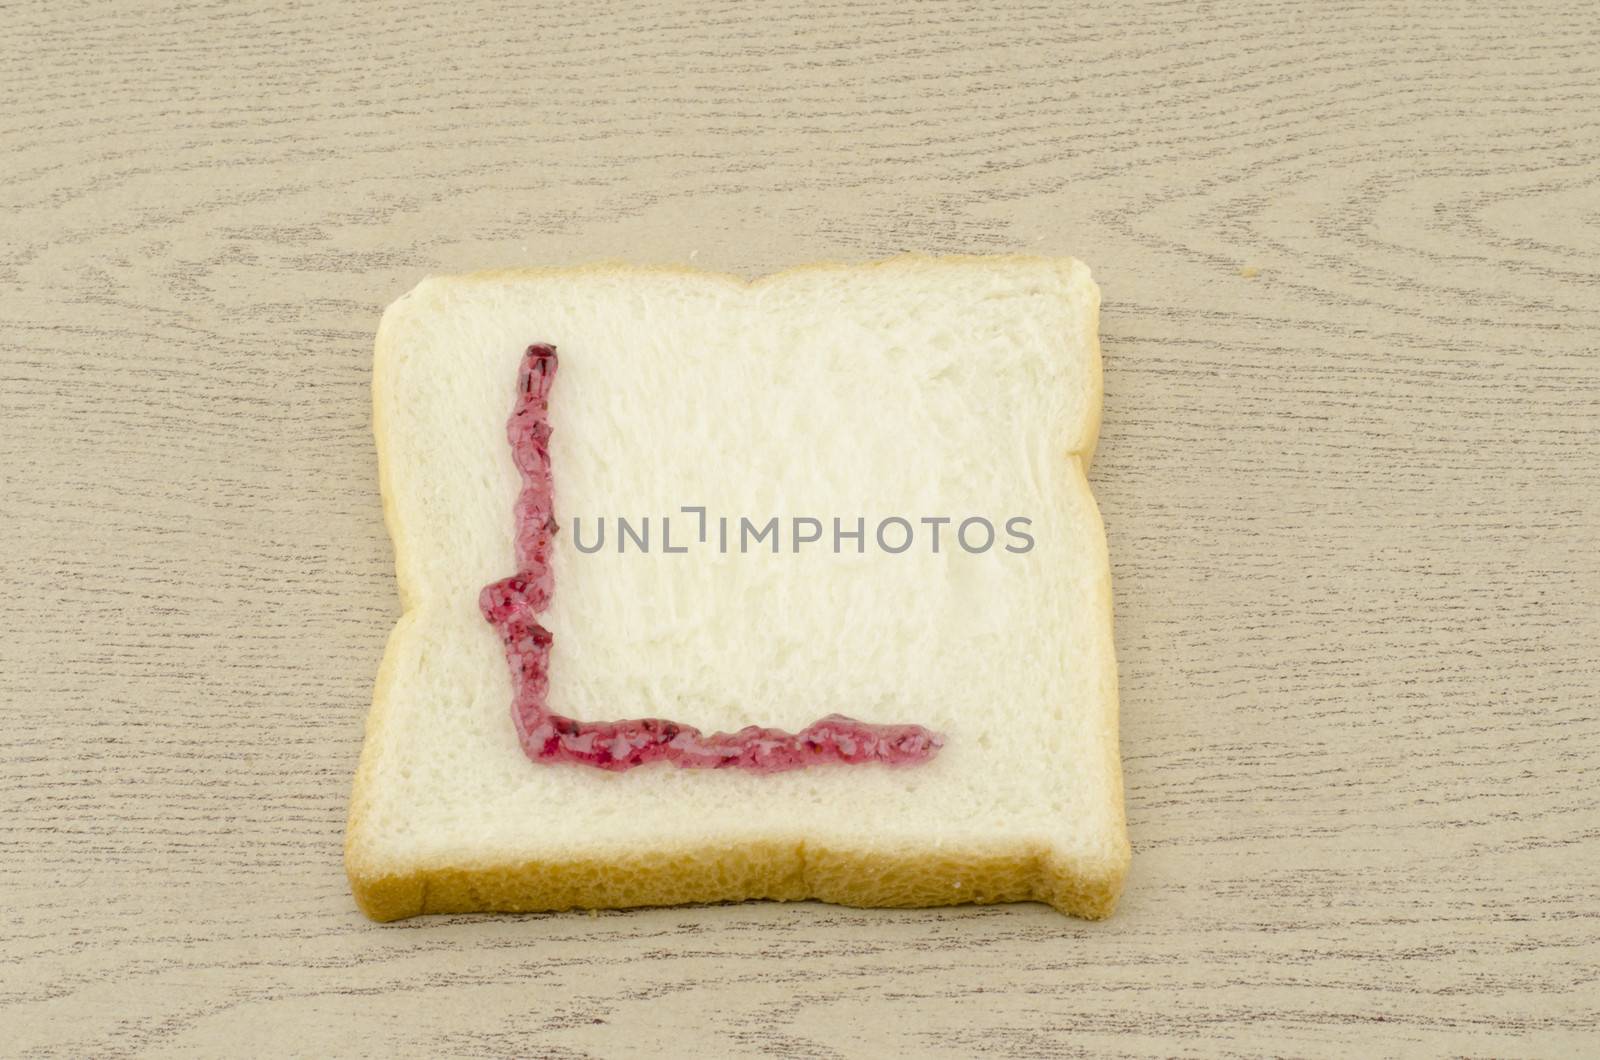 jam alphabet on sliced bread on wood background